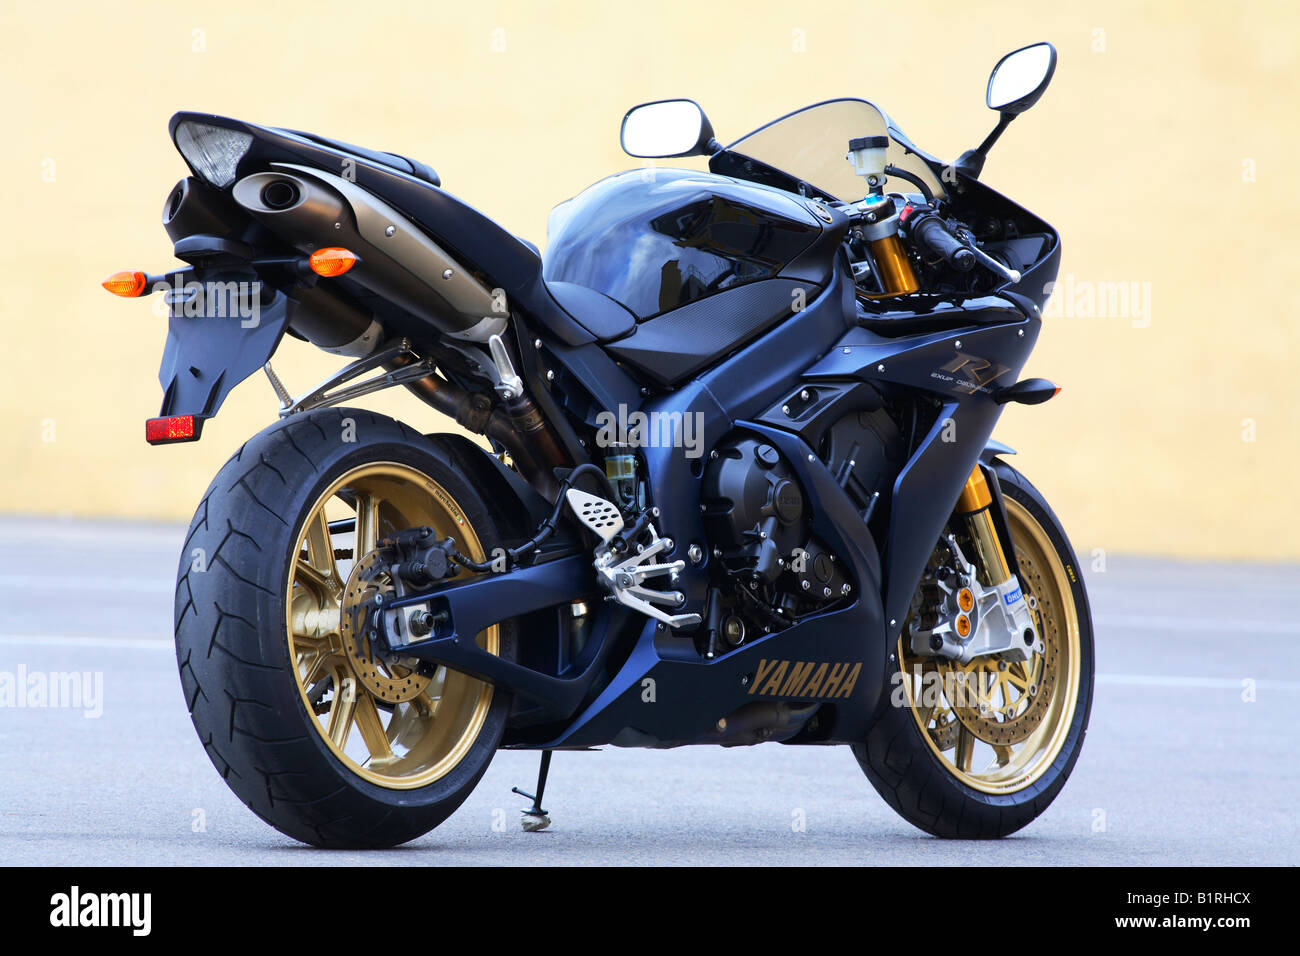 Motorbike Yamaha R1 Stock Photo